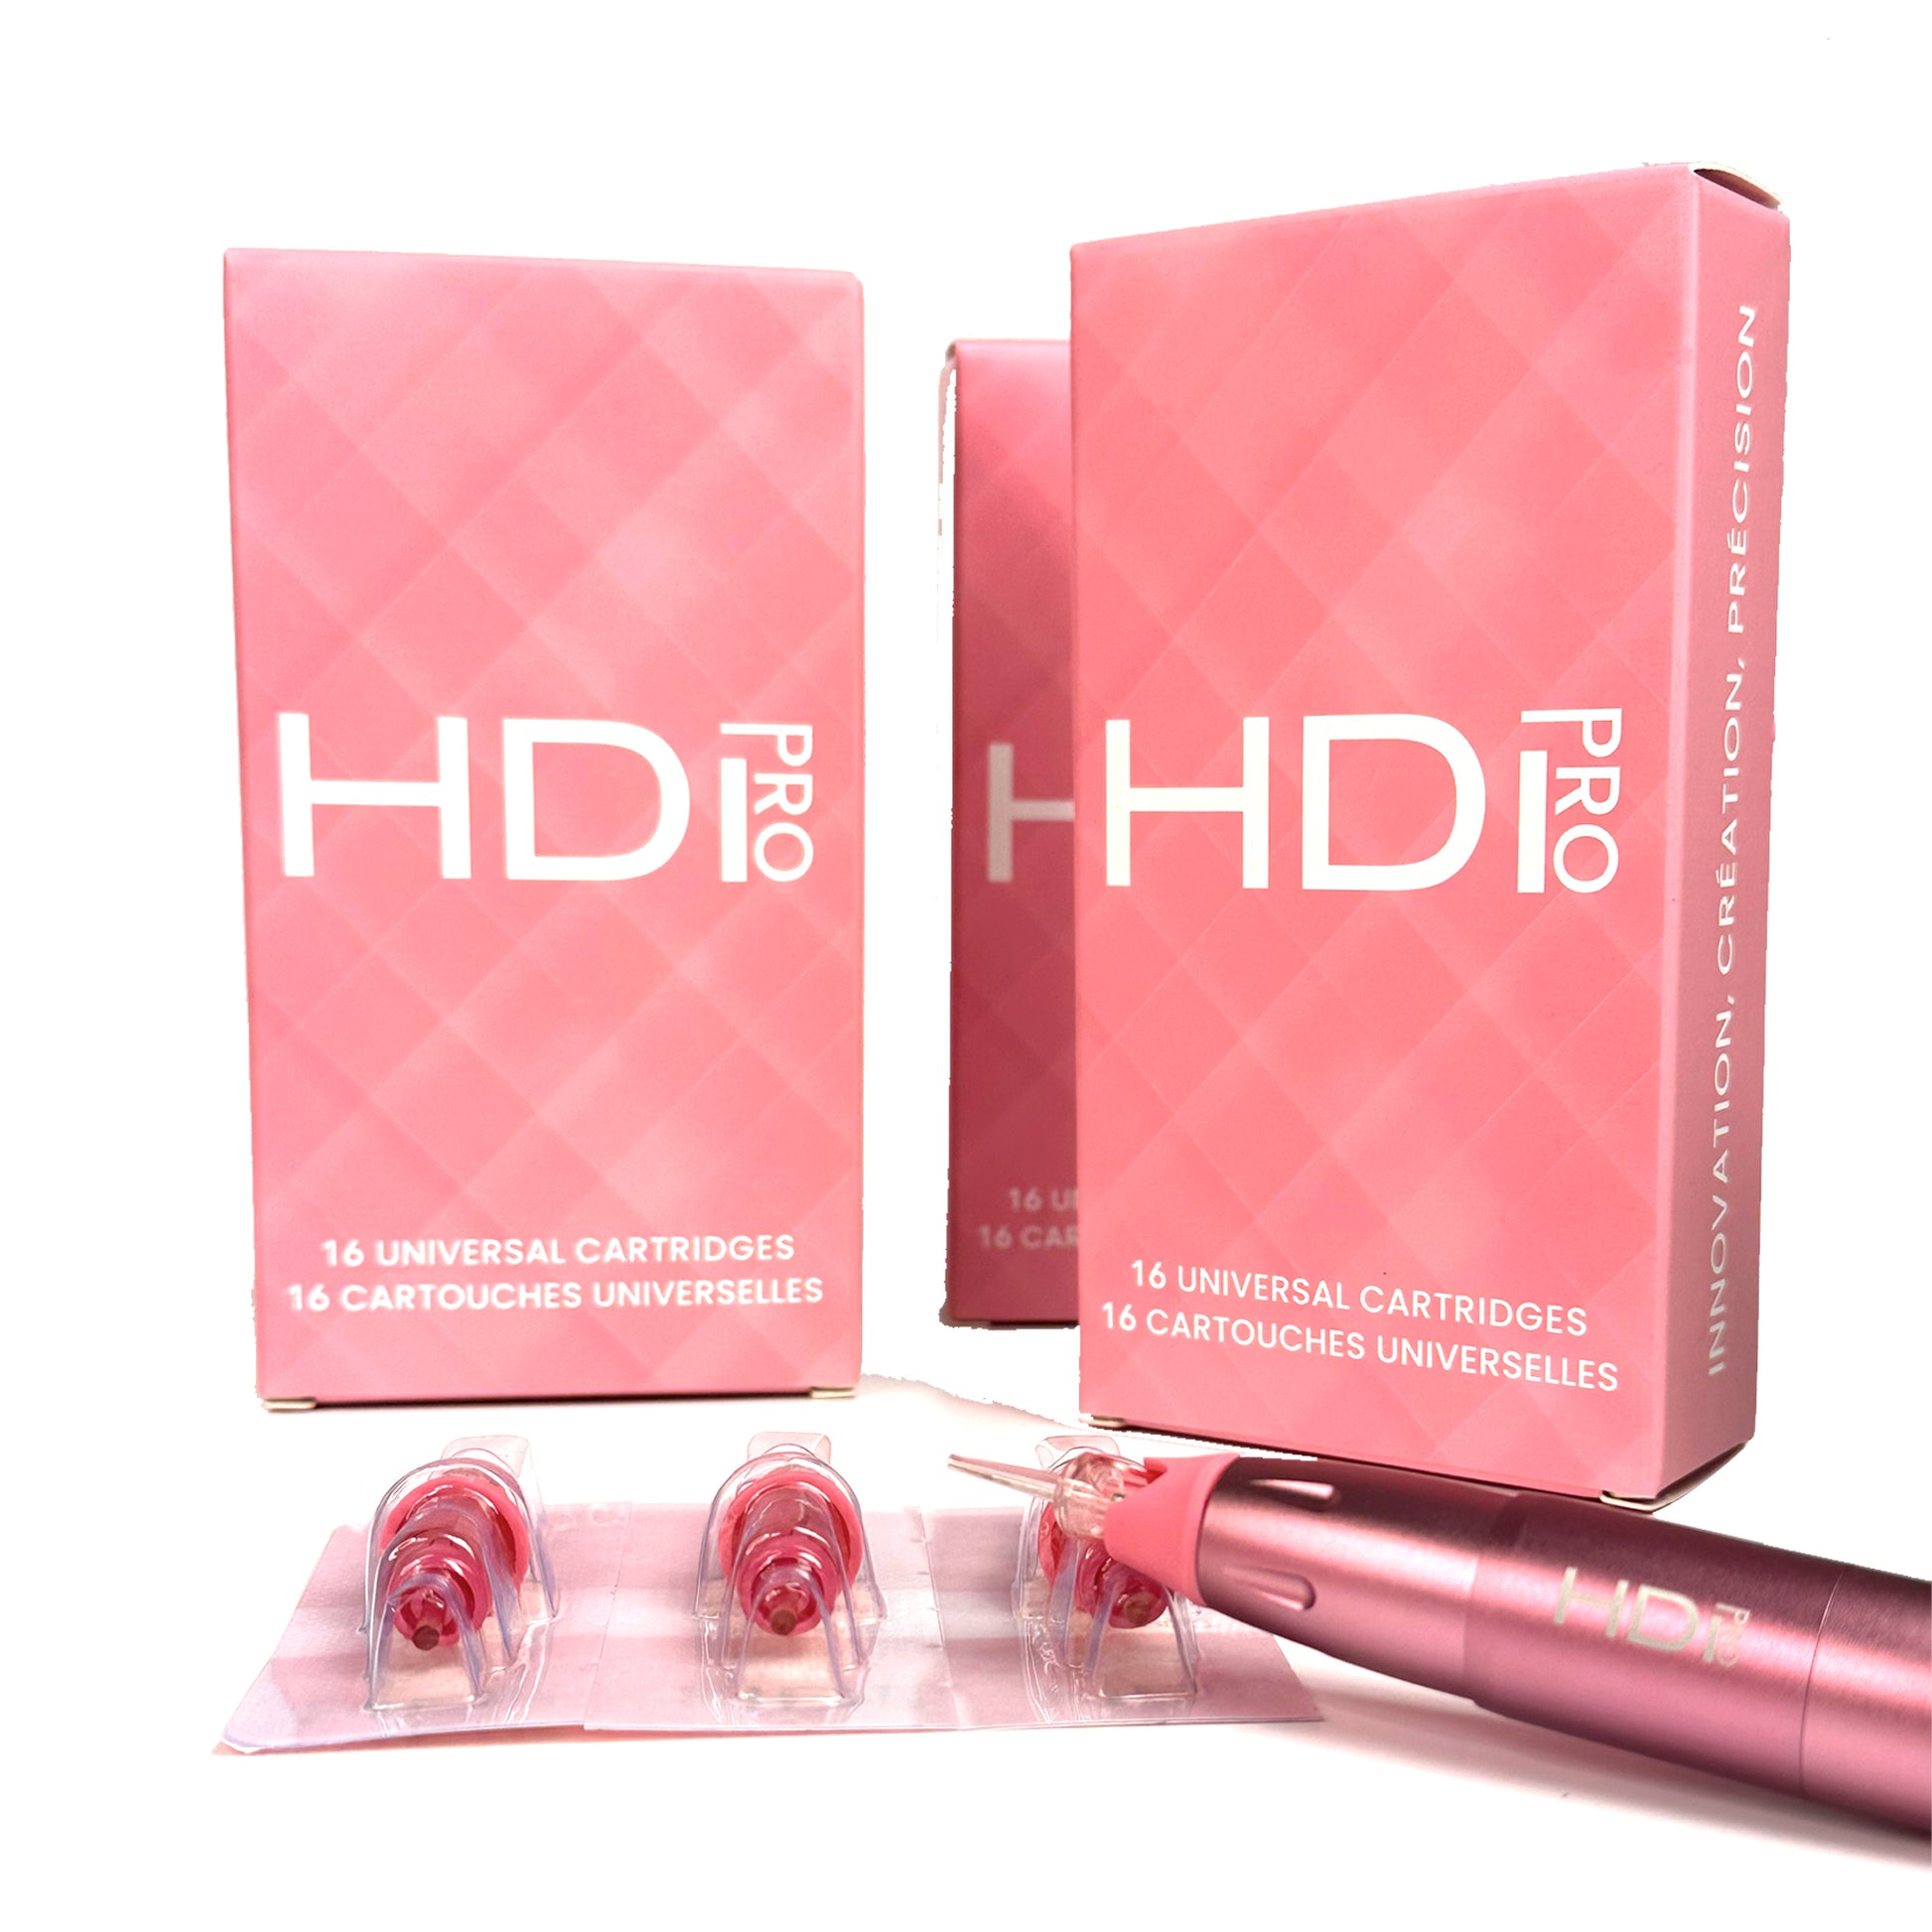 HDi PRO Permanent Makeup Cartridges- LASHFOREVER CANADA